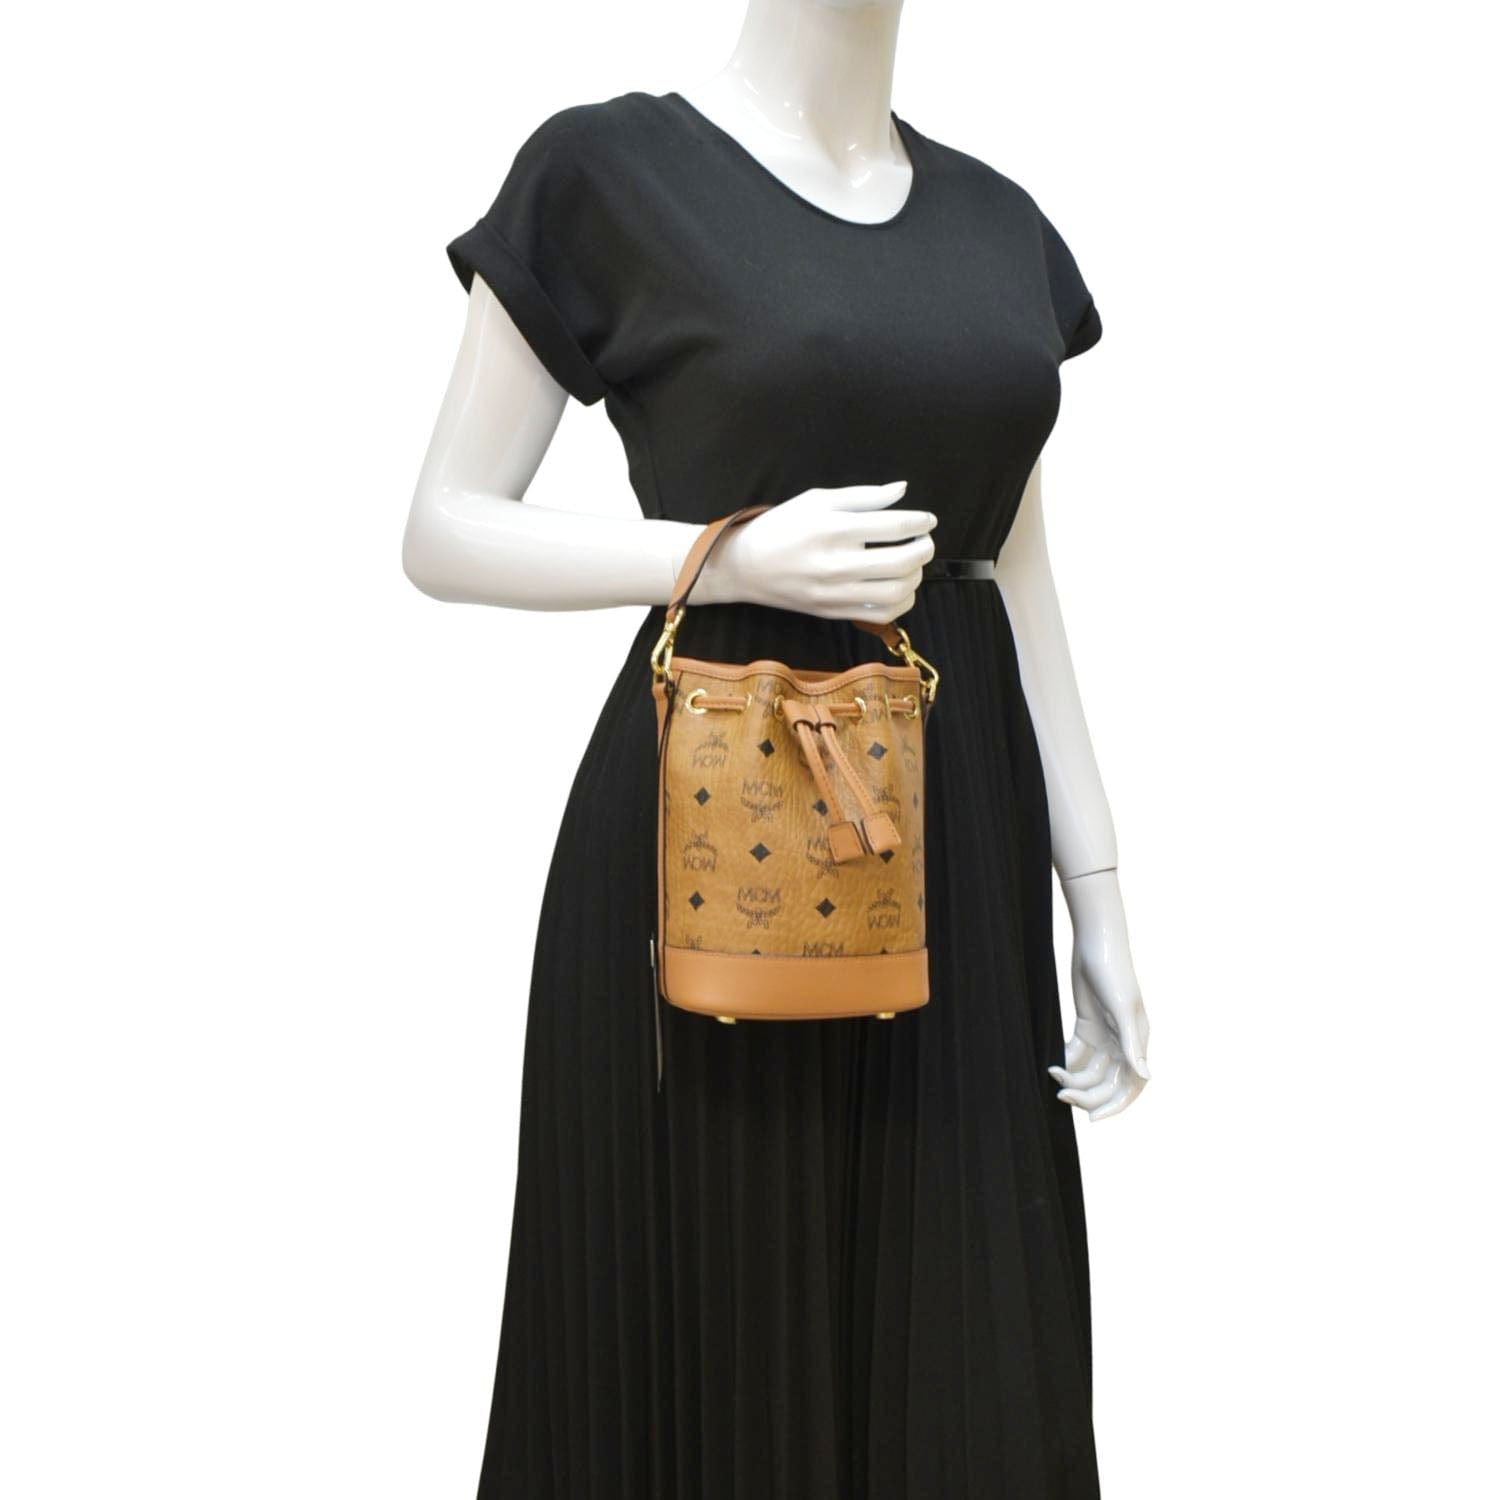 MCM Vintage Visetos Barrel Bag - Shoulder Bags, Handbags